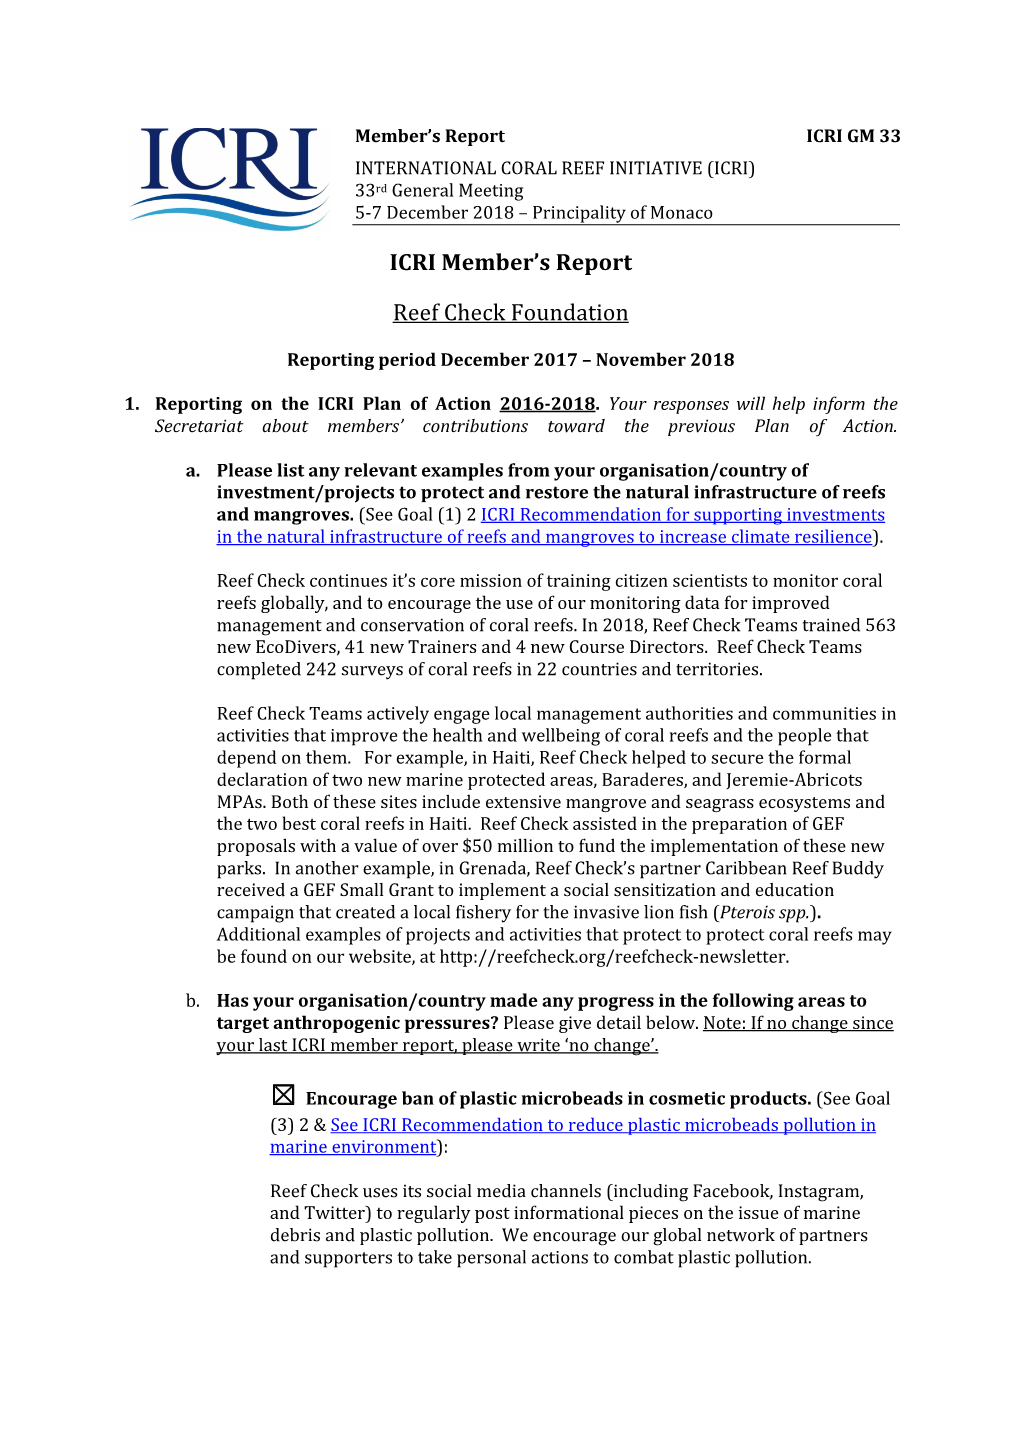 ICRIGM33-Members Report Reef Check 2018